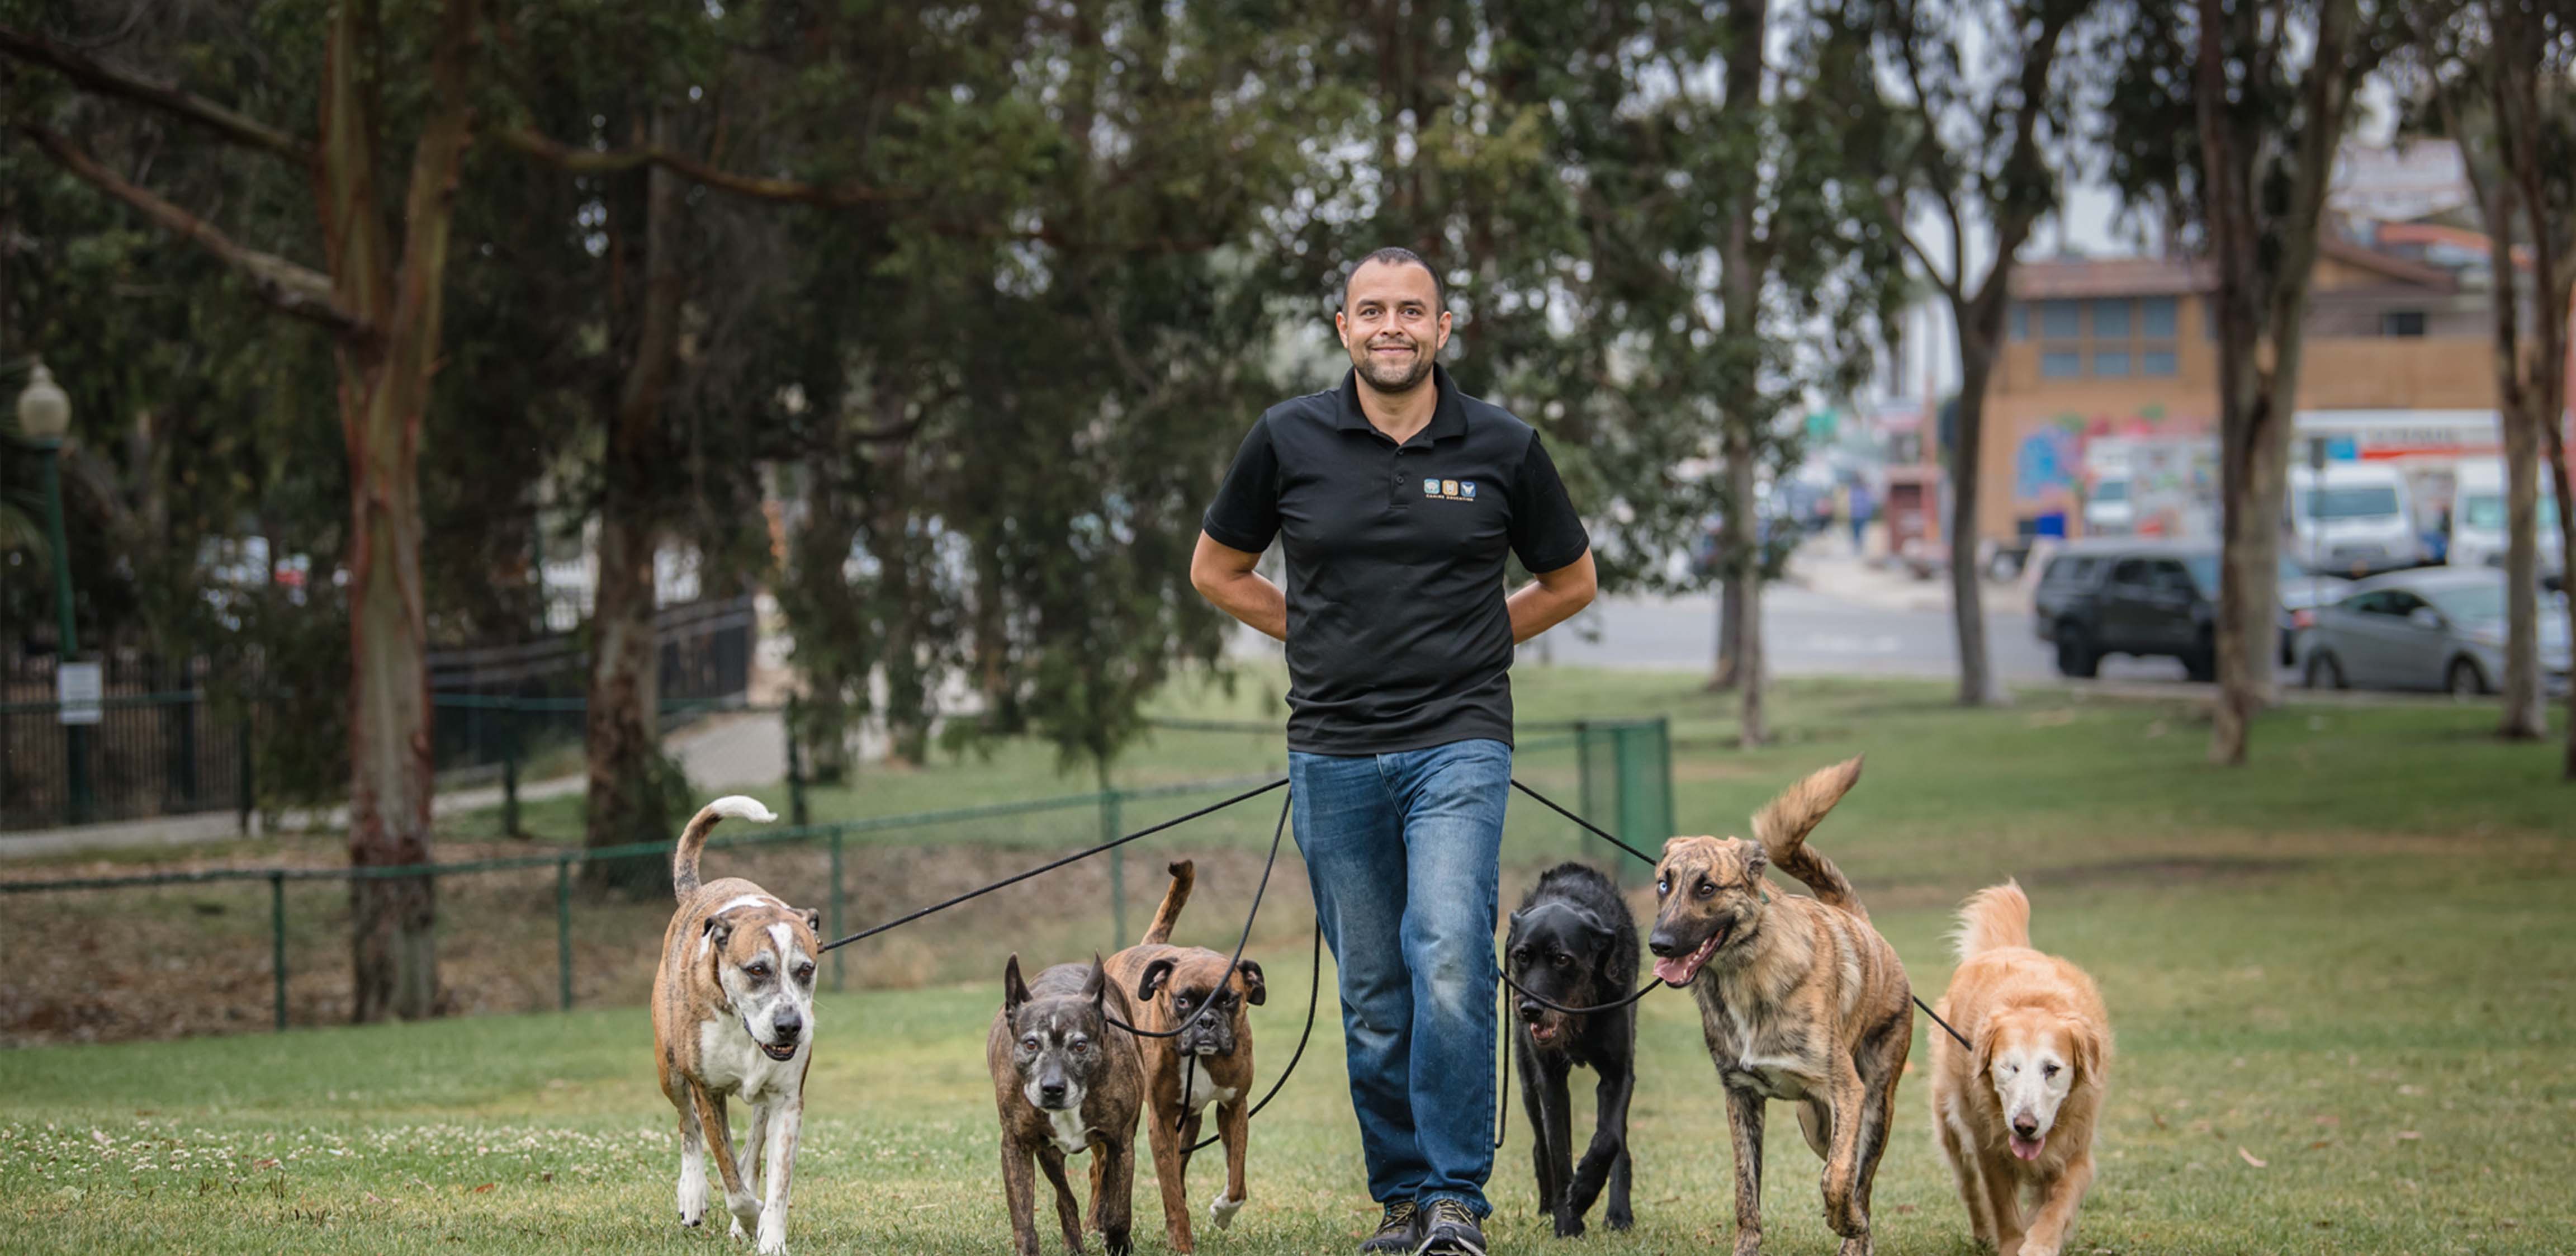 fernando san diego dog trainer, owner of canine education